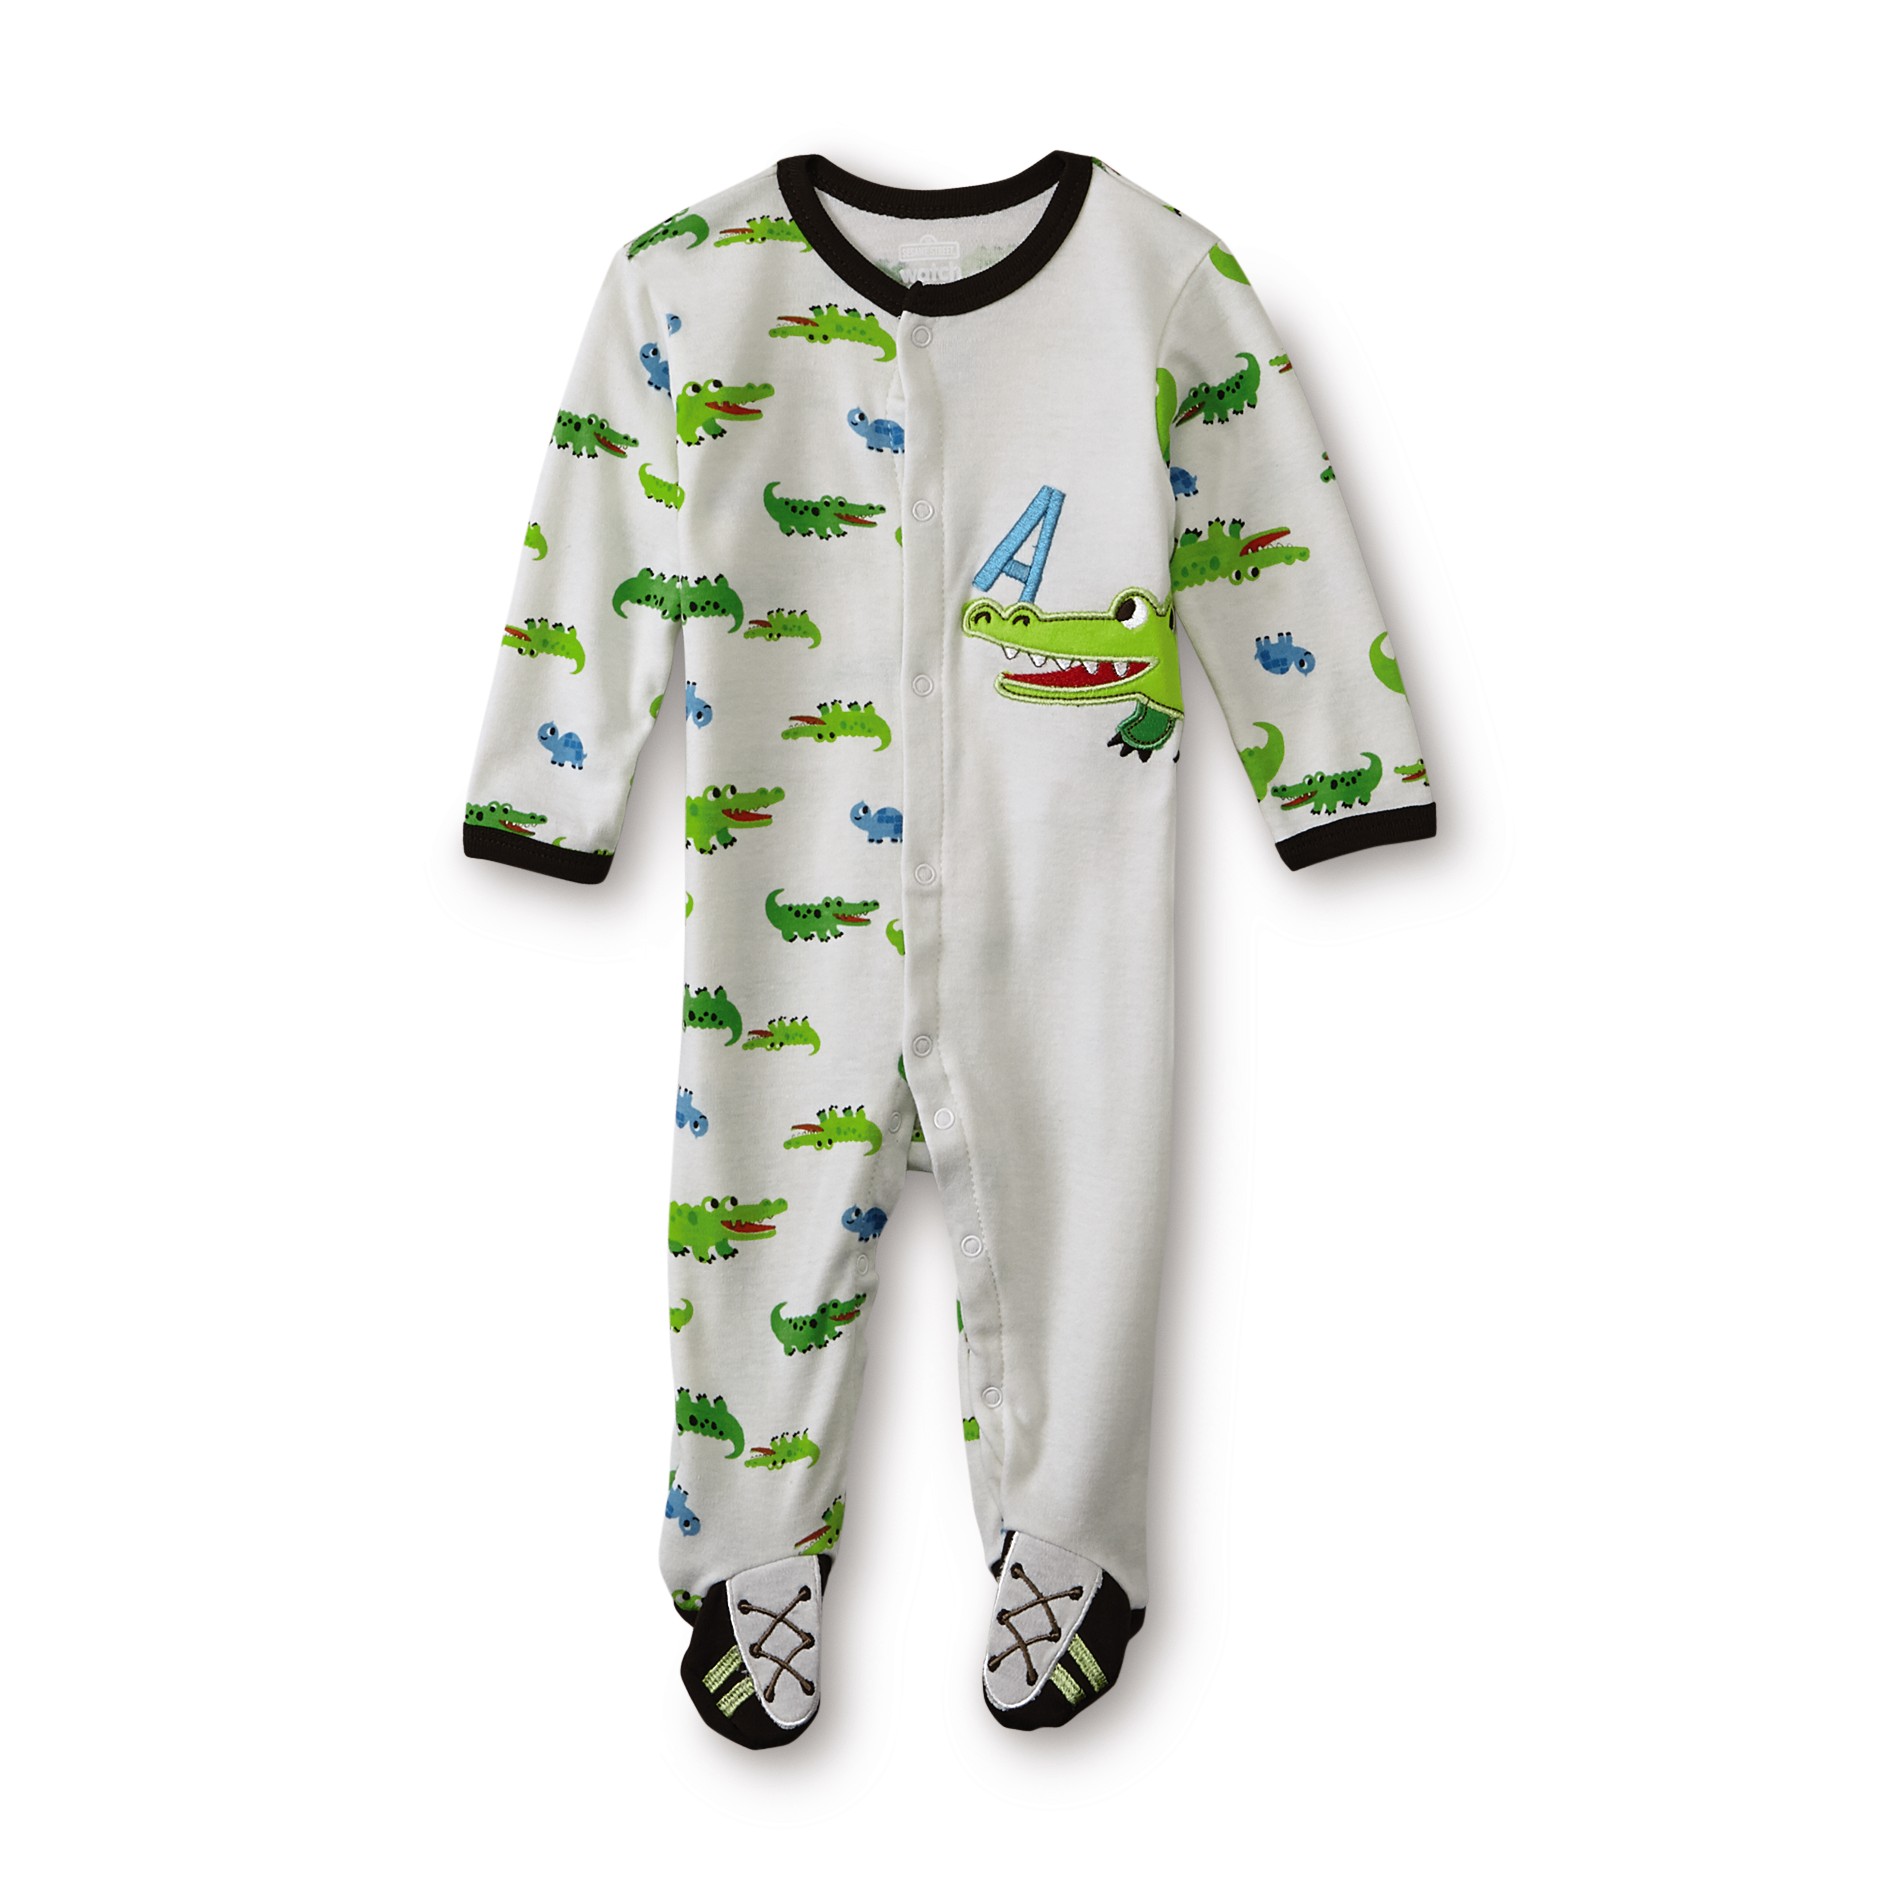 Sesame Street Newborn Boy's Footed Pajamas - Alligator